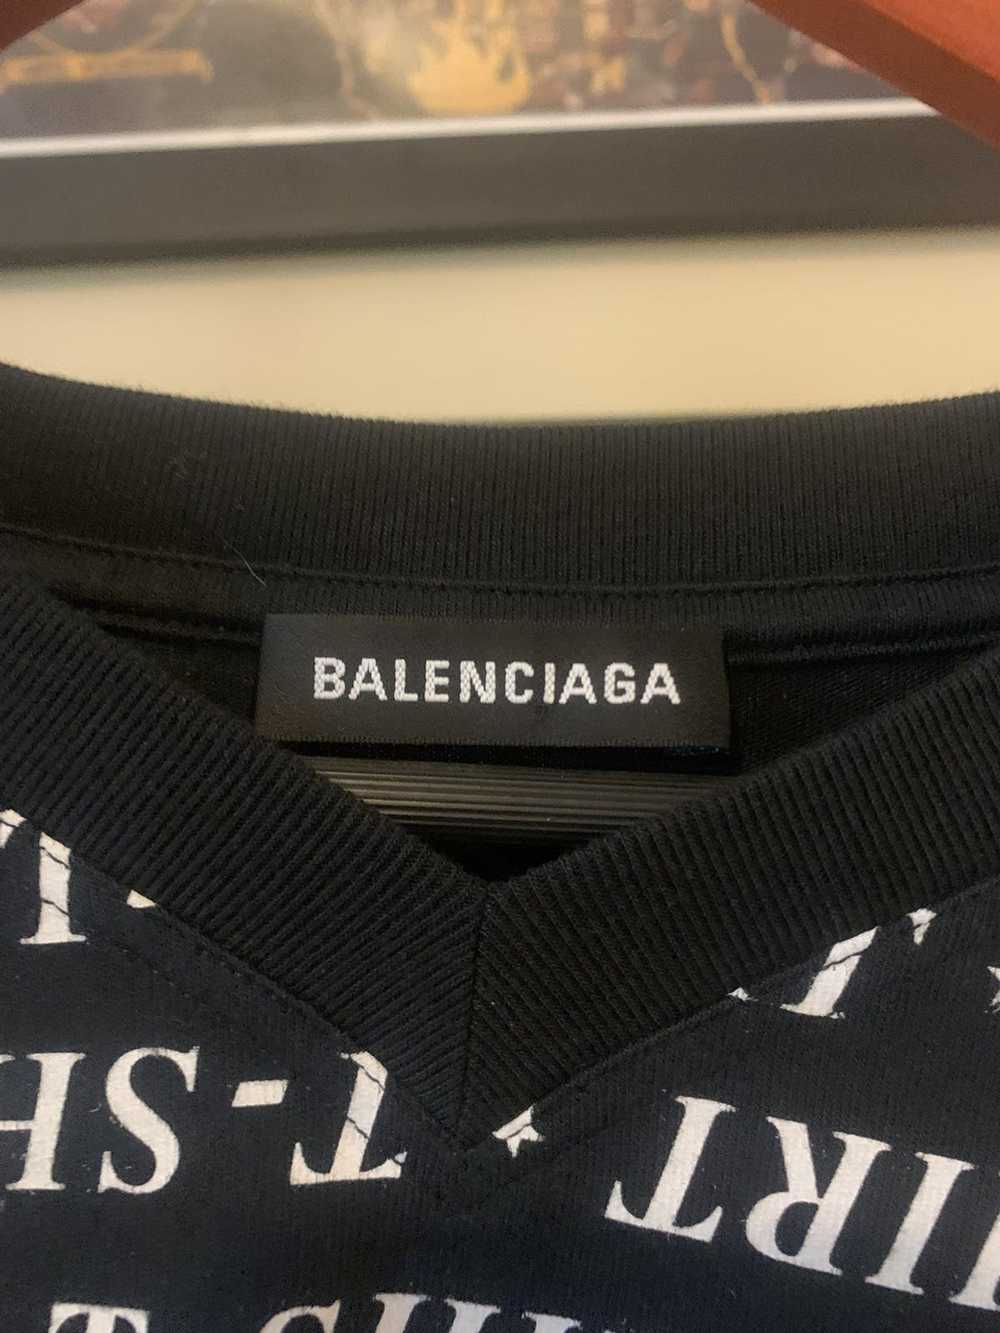 Balenciaga All over print shirt - image 3